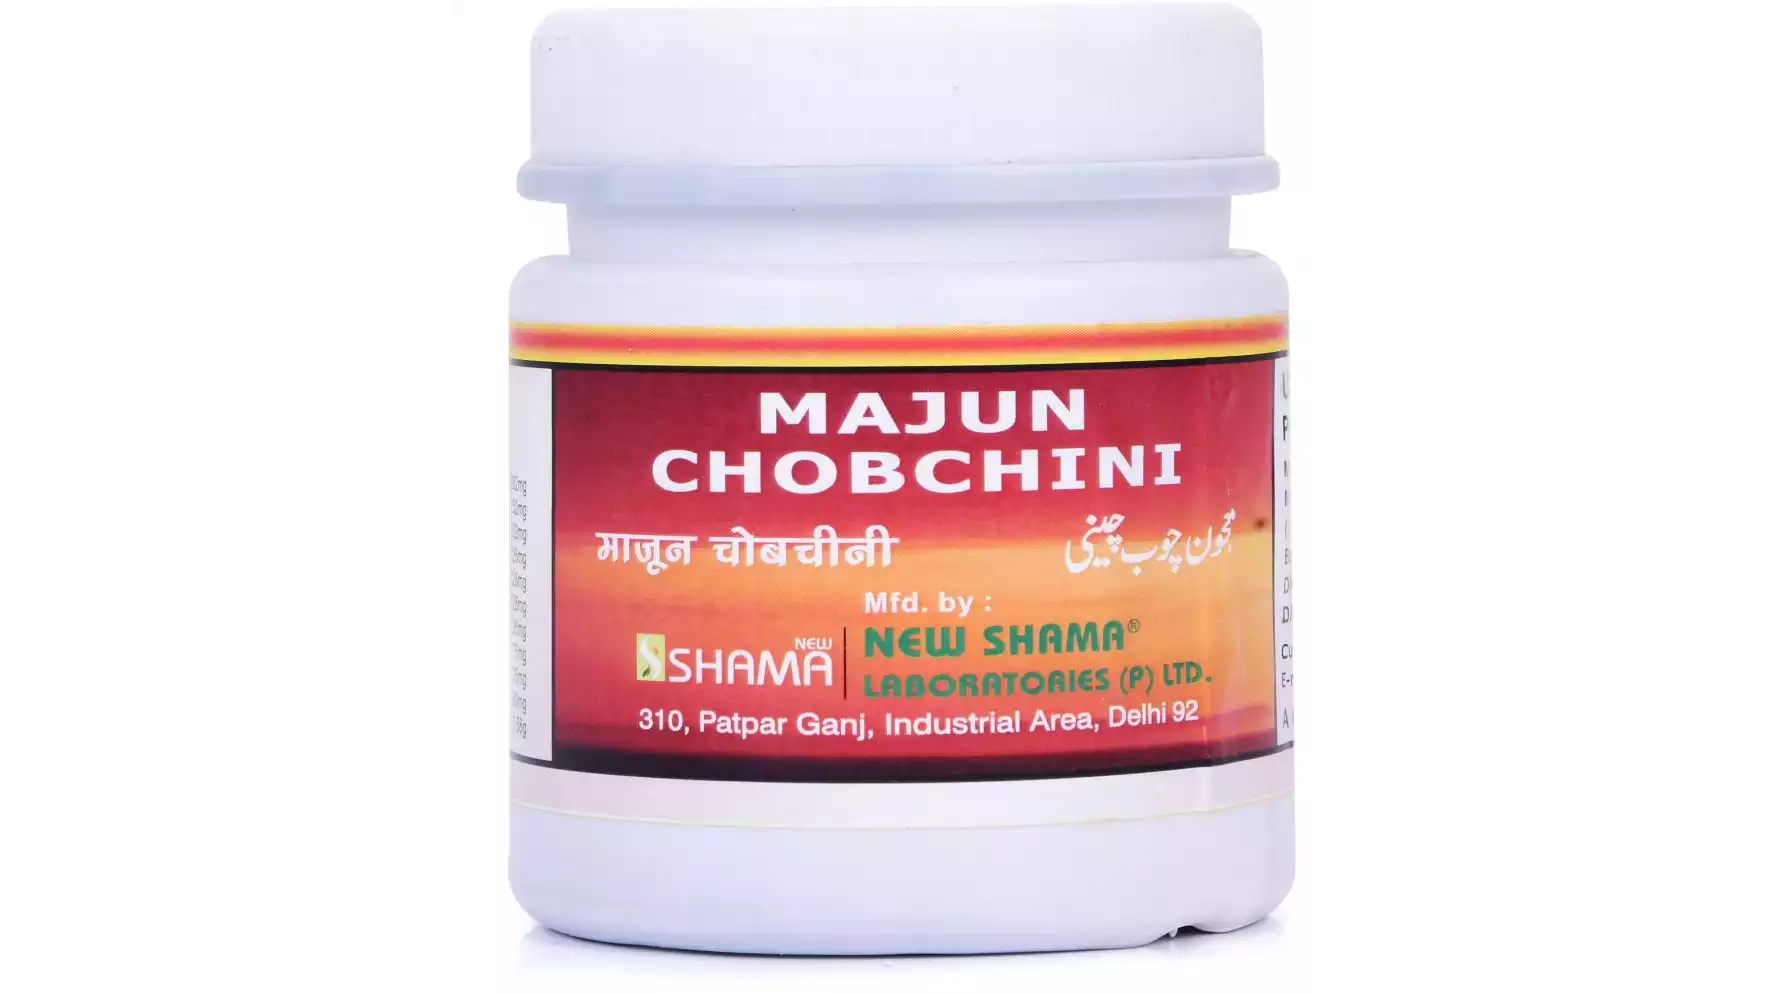 New Shama Majun Chobchini (125g)